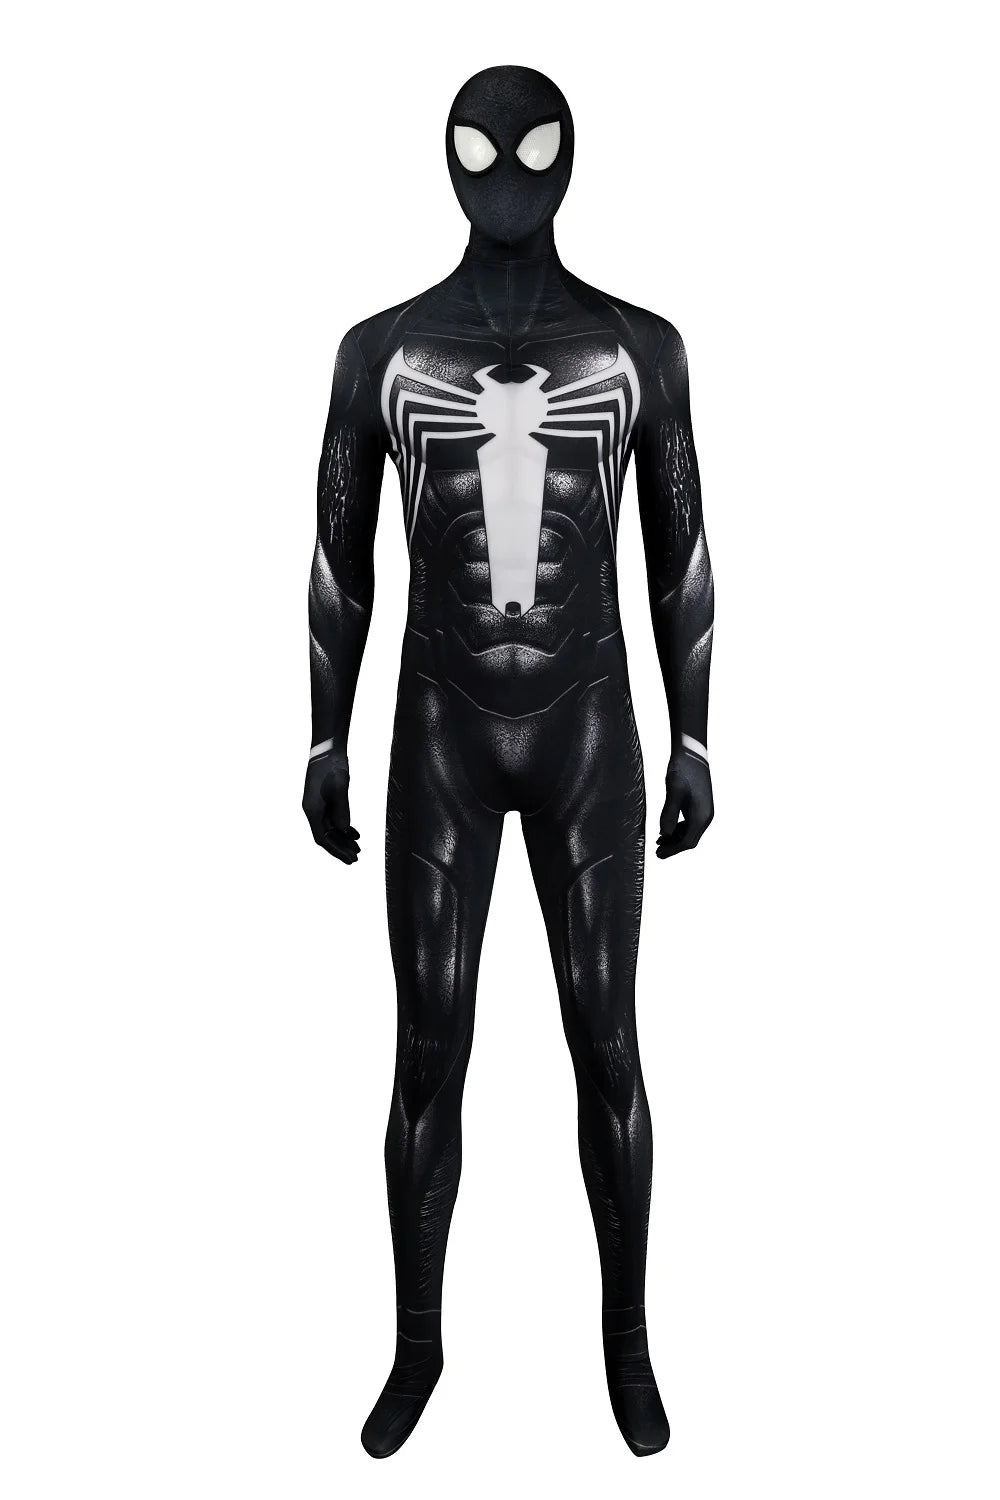 Venom Symbiont Spiderman Cosplay Costume Superhero 3D Printed Spandex Venom Bodysuits Halloween Costume Zenzai Suits Adult Kids